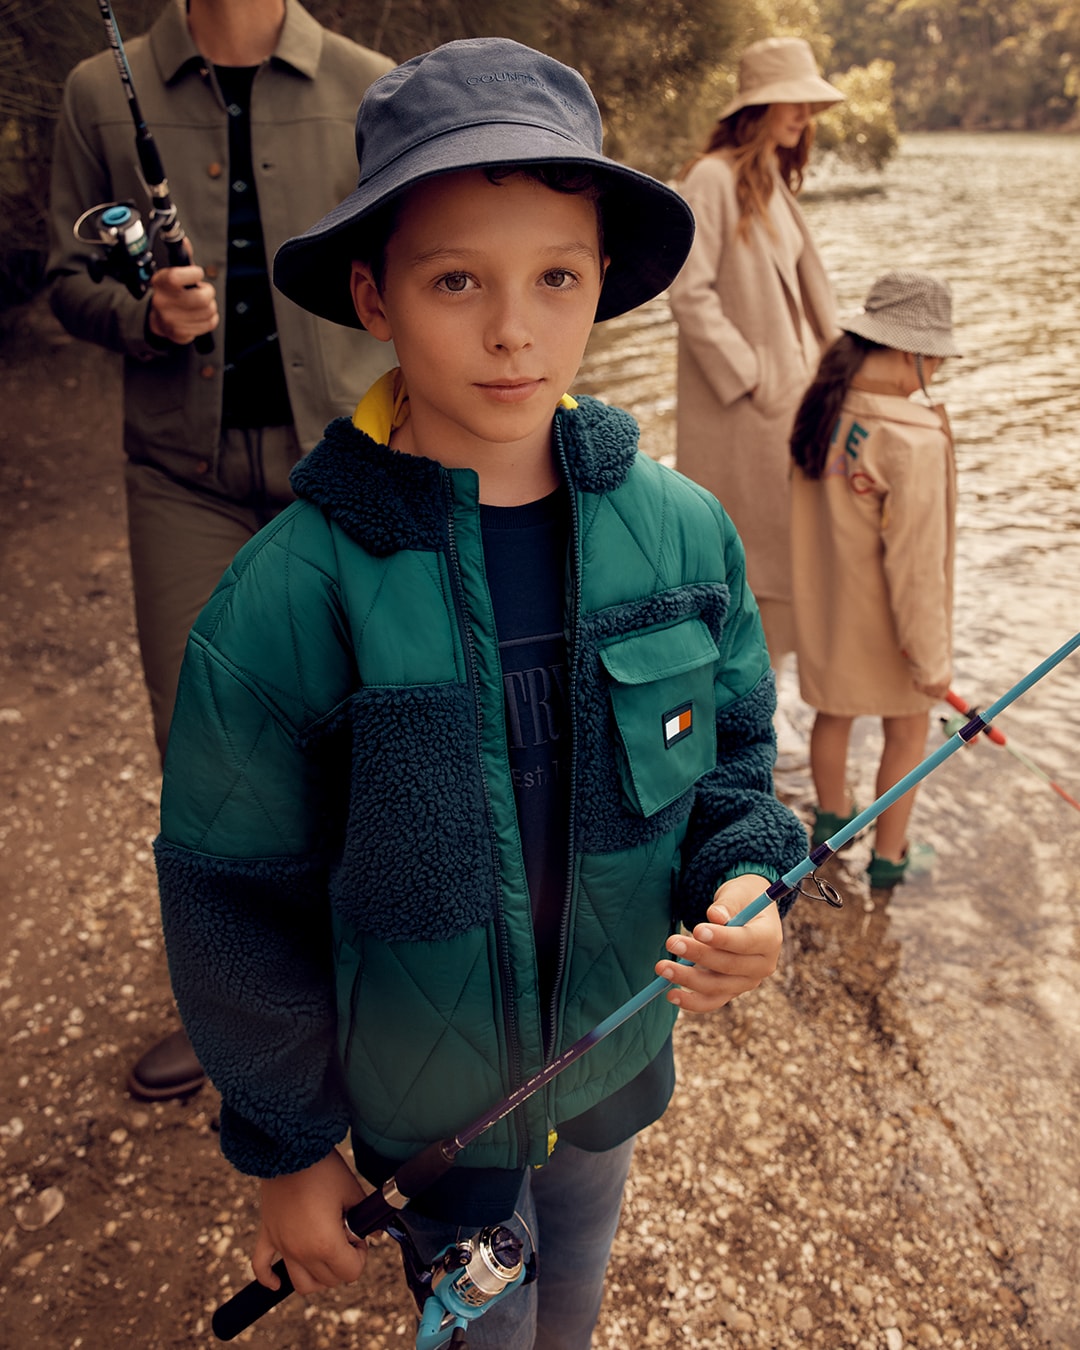 A boy fishing by a stream, wearing Tommy Hilfiger